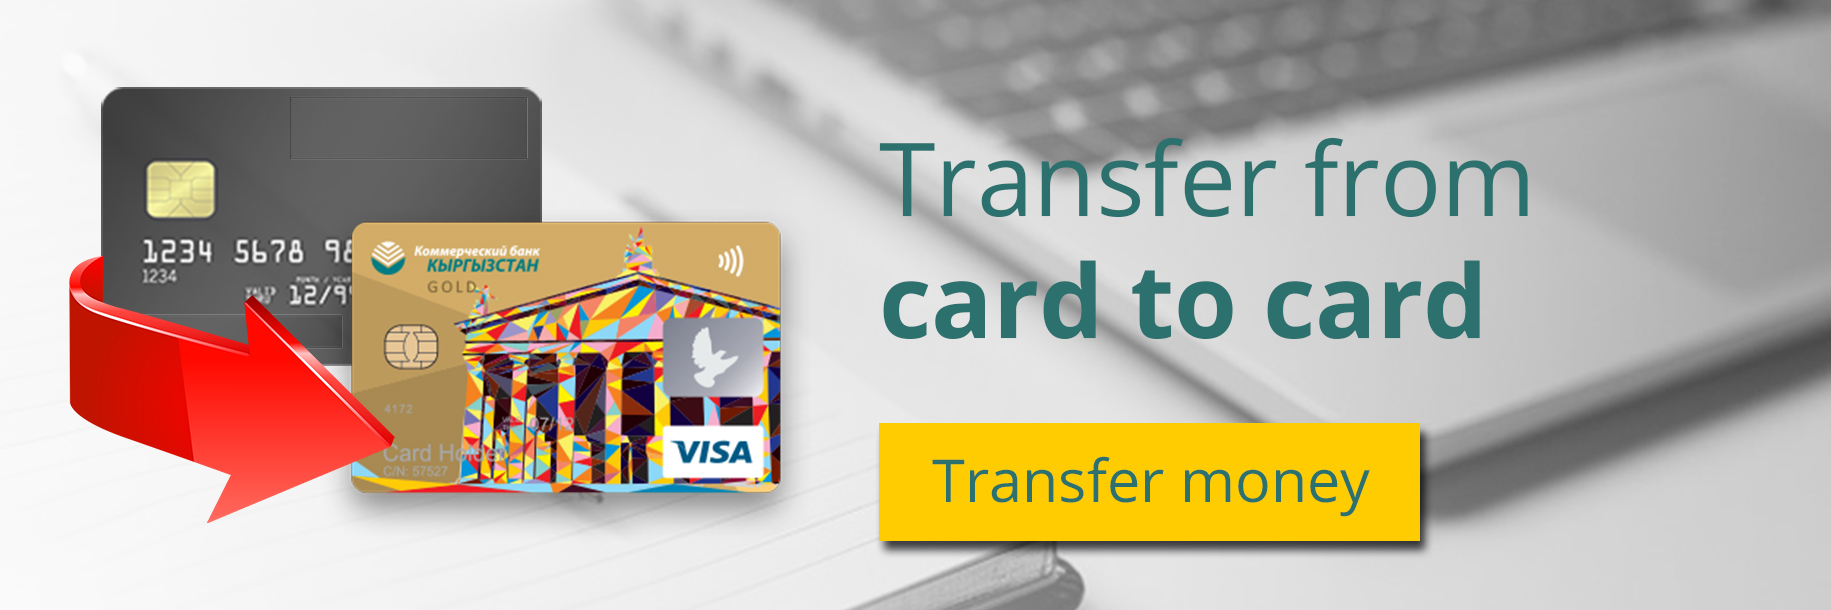 Card transfer